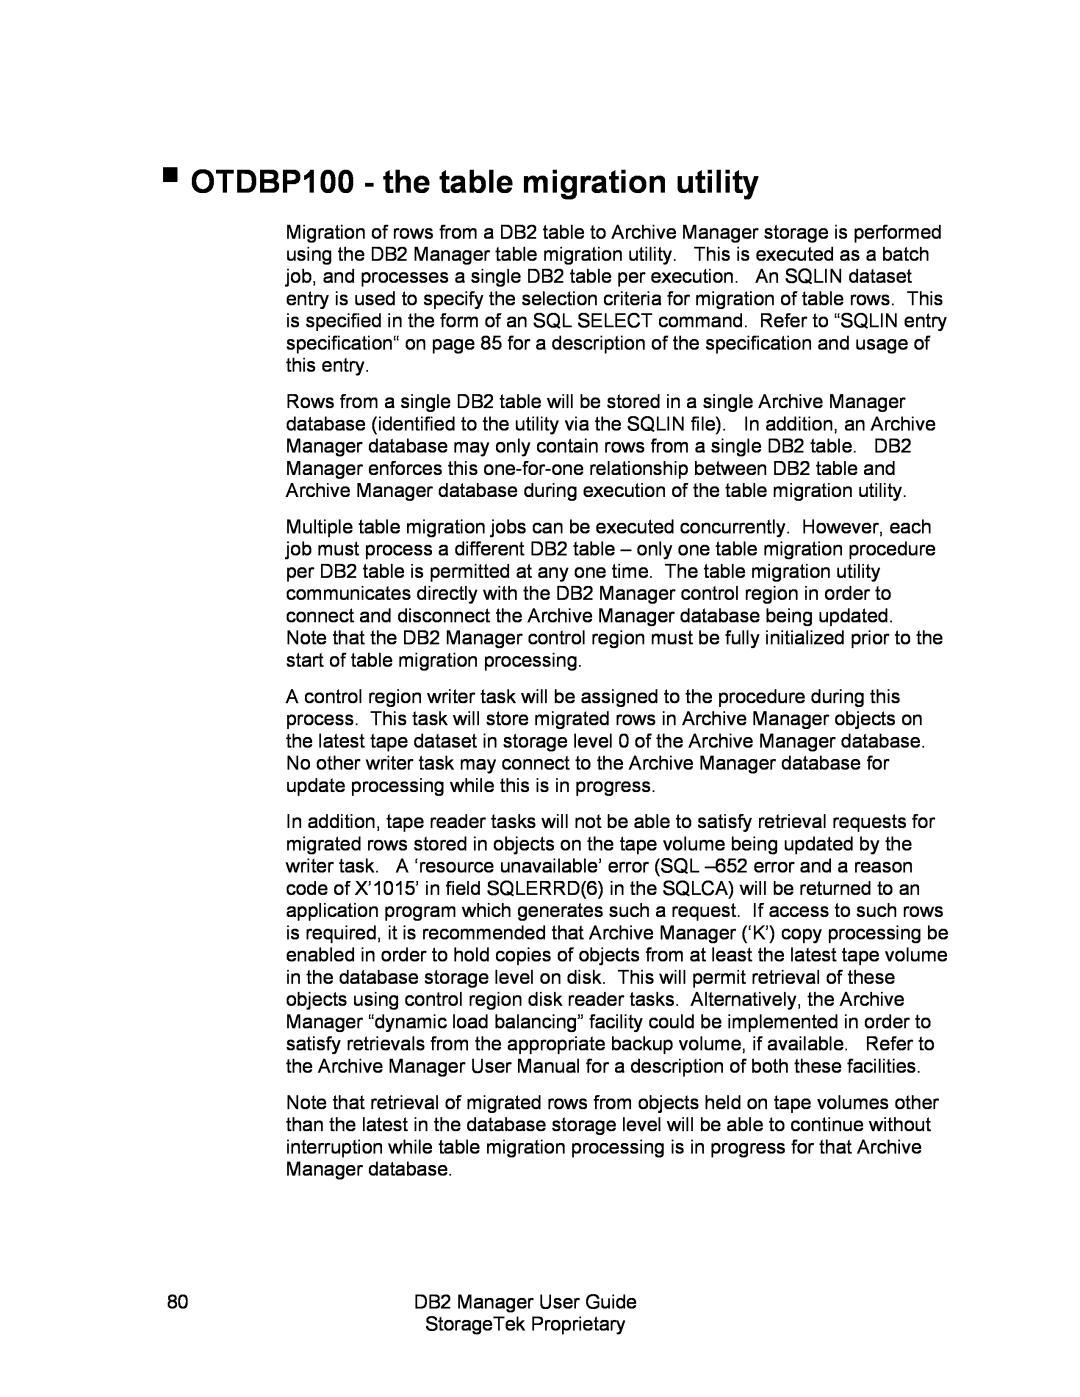 StorageTek 312564001 manual OTDBP100 - the table migration utility 